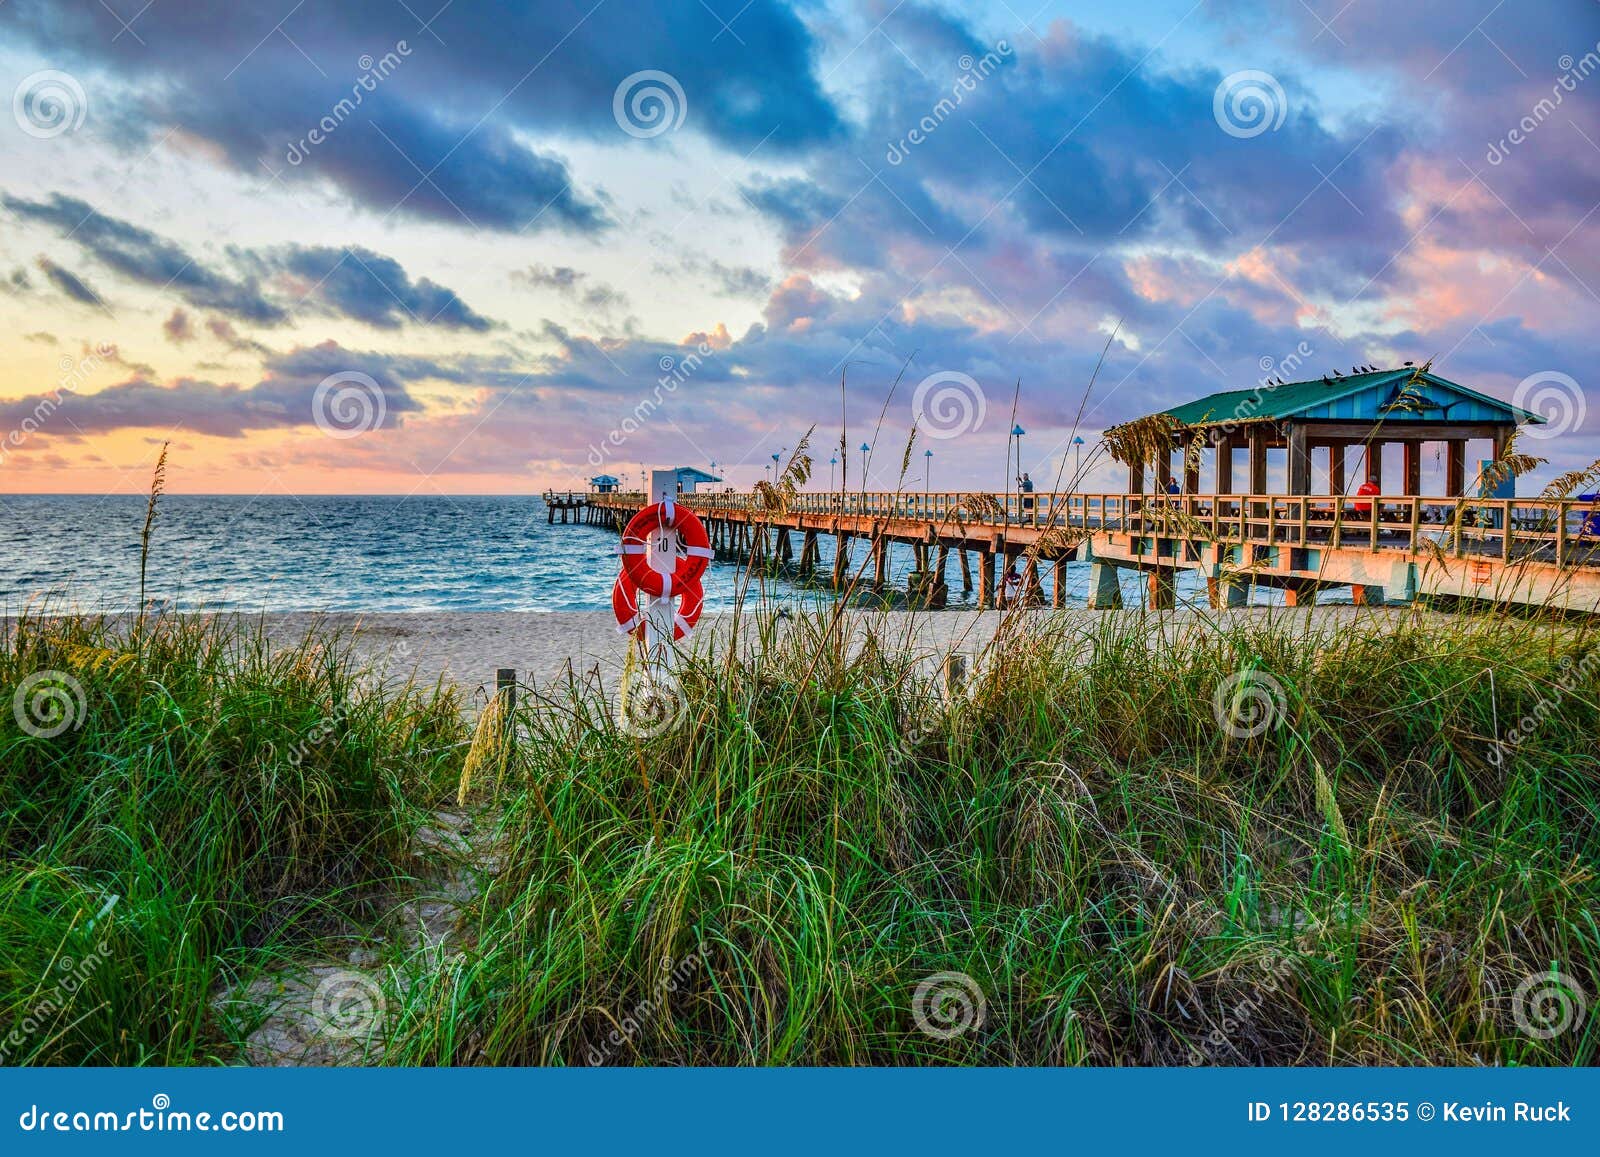 Beach Pier near Fort Lauderdale Florida FL. Beach Pier in Deerfield Beach Florida FL near Fort Lauderdale.